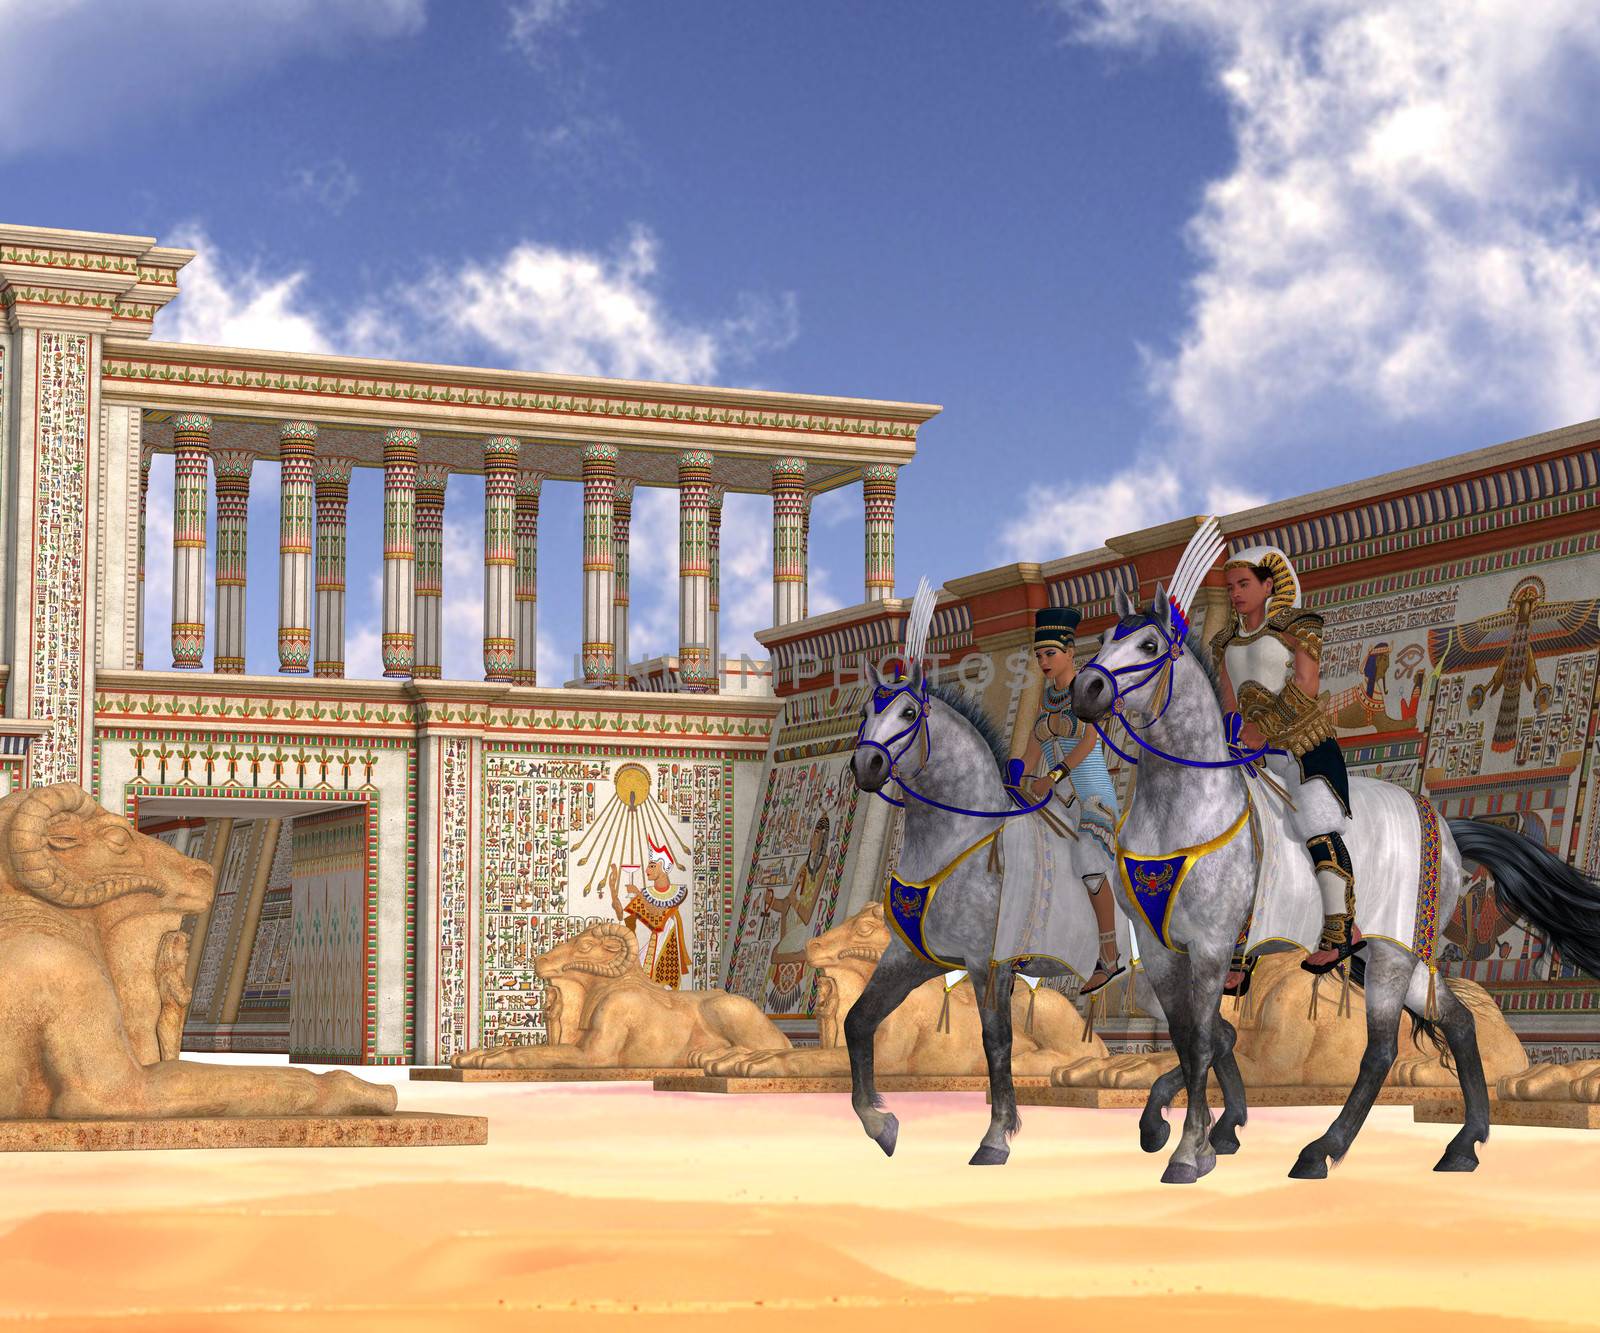 Egyptian Nobility on Horseback by Catmando